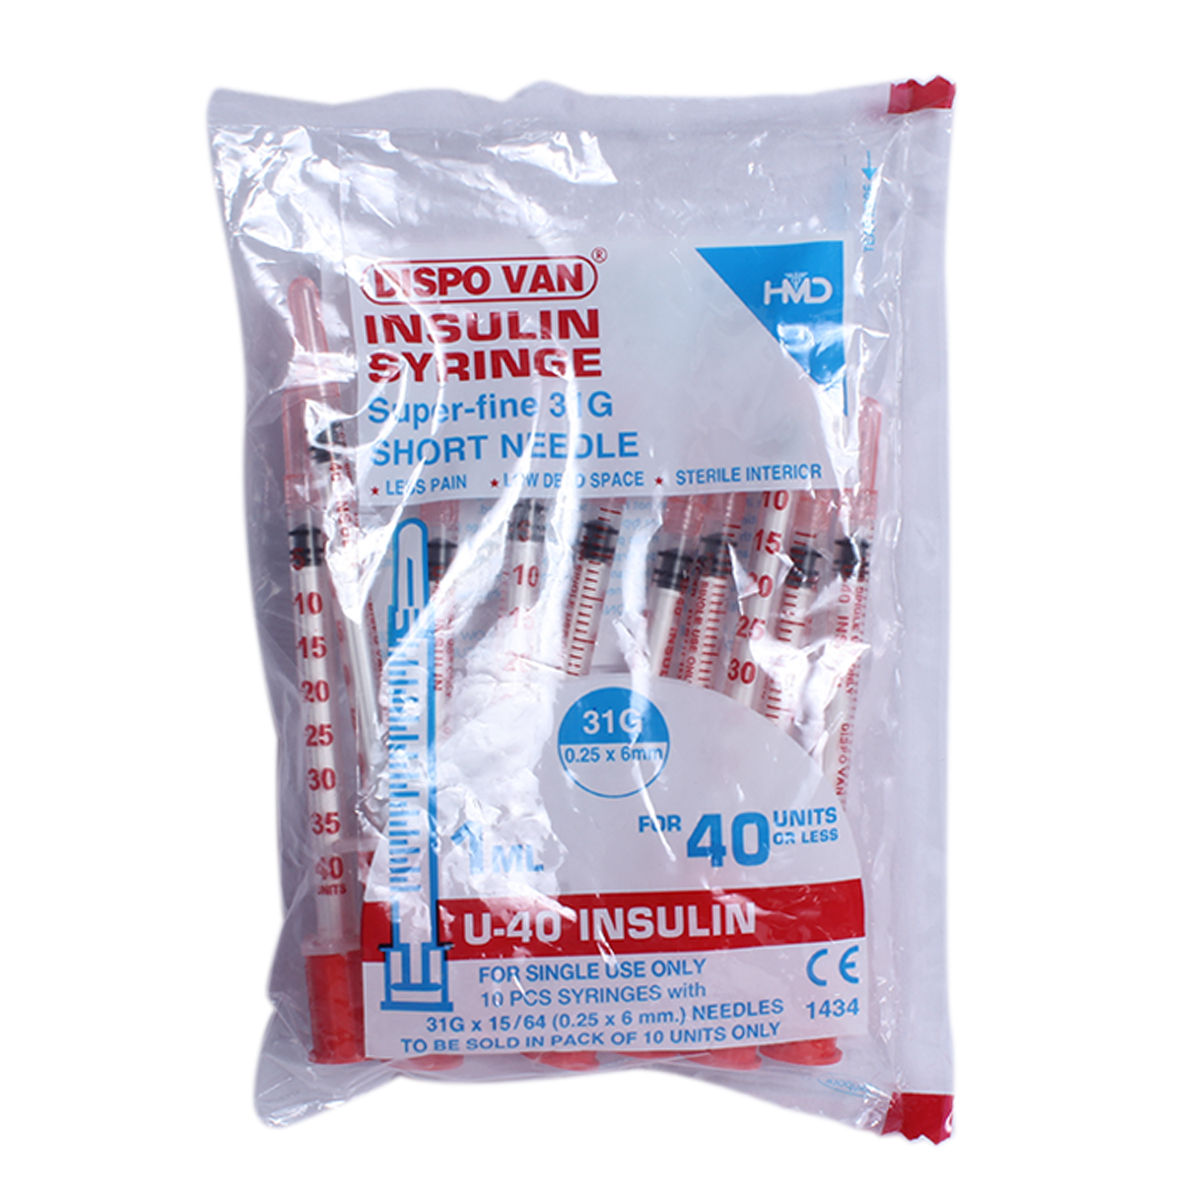 Buy Dispovan Insulin Syringe 1 ml-40Iu-30G, 10's Online